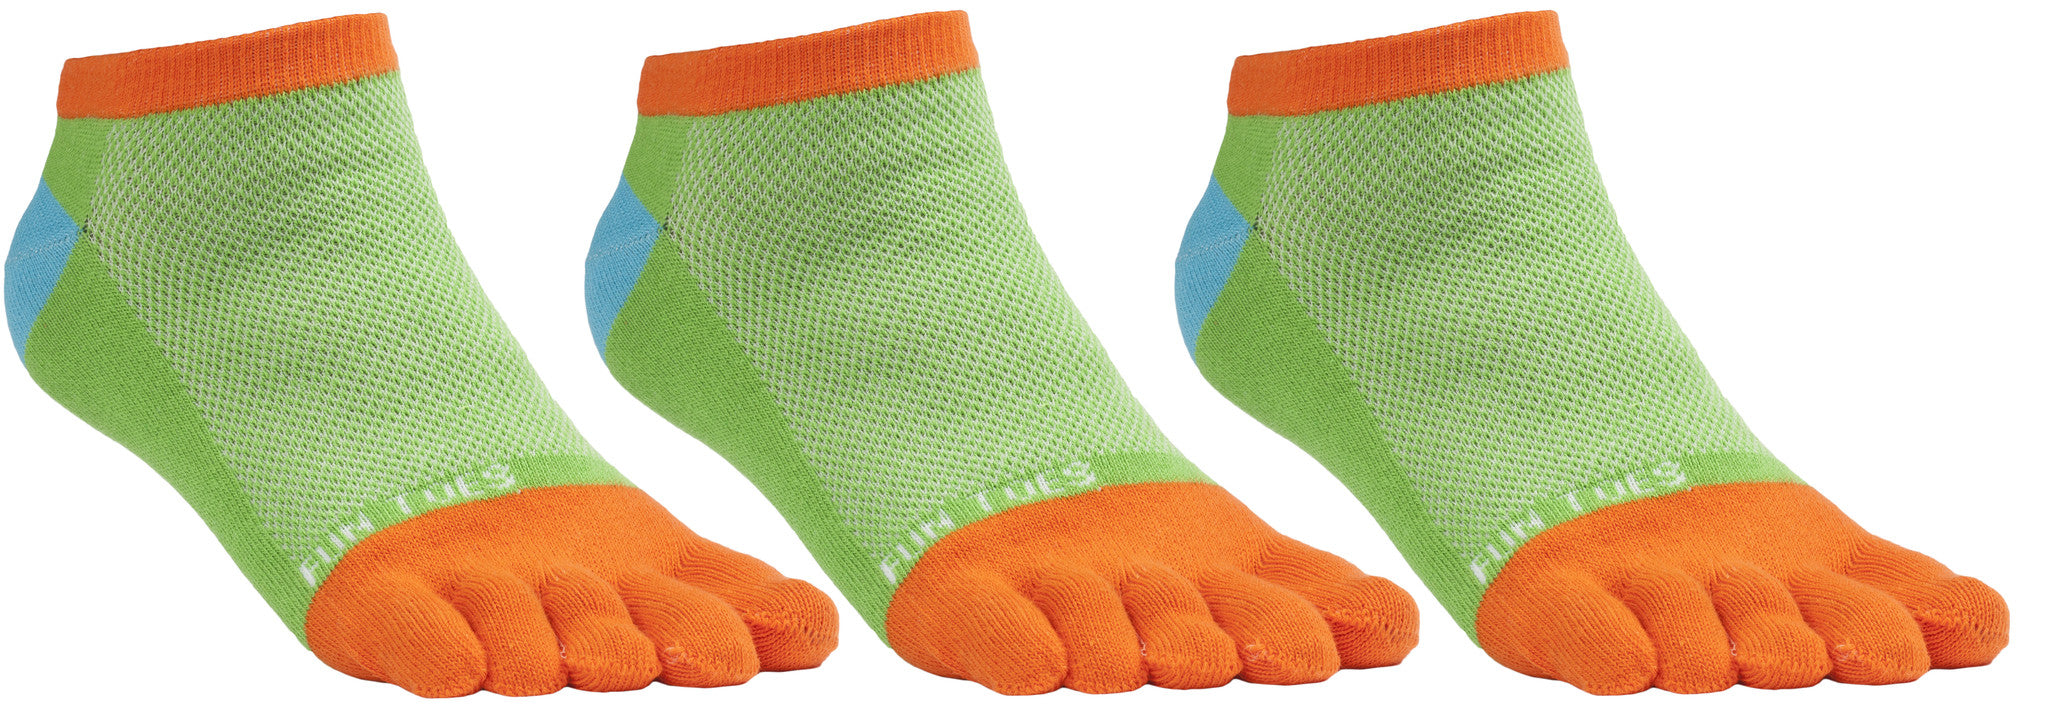 FUN TOES Women's Toe Socks Barefoot Running Socks Size 9-11 Shoe Size 4-10 Pack of 3 Pairs   FUN GREEN